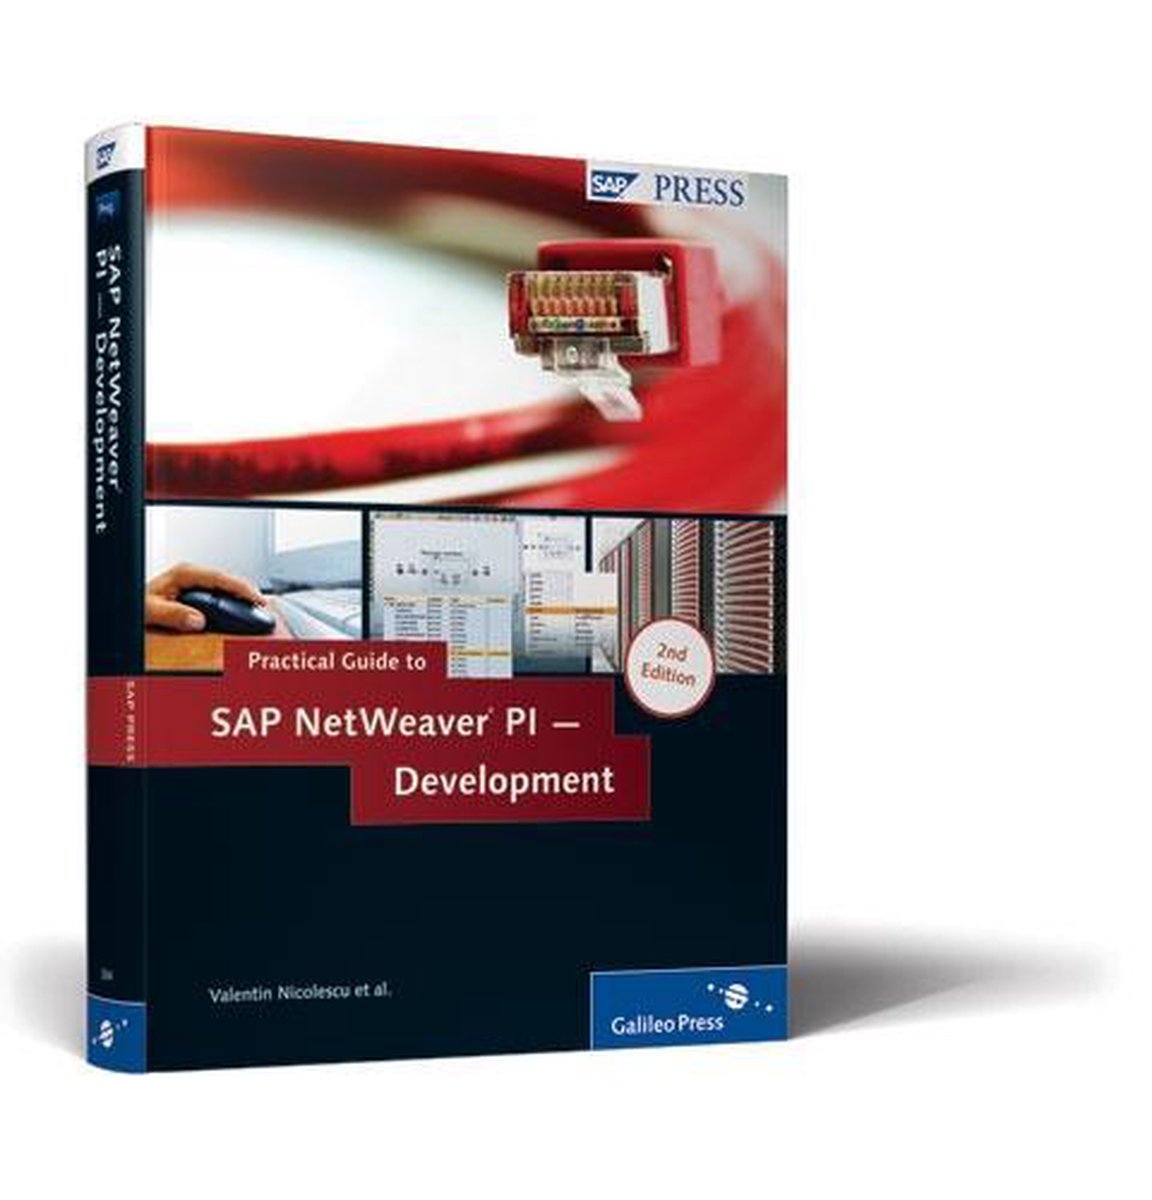 Practical Guide to SAP NetWeaver PI - Development